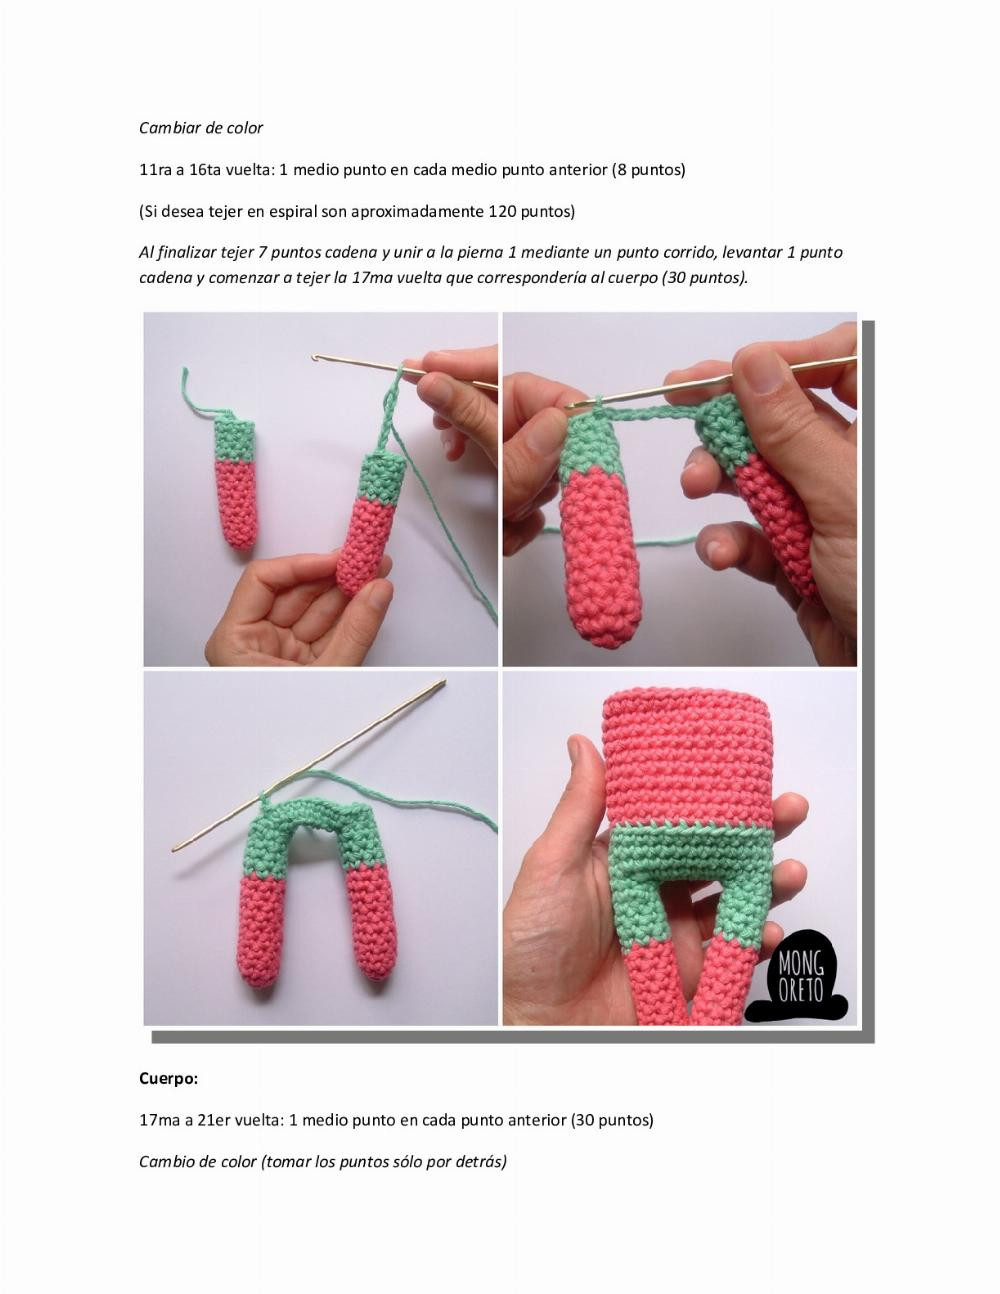 mong oreto crochet pattern